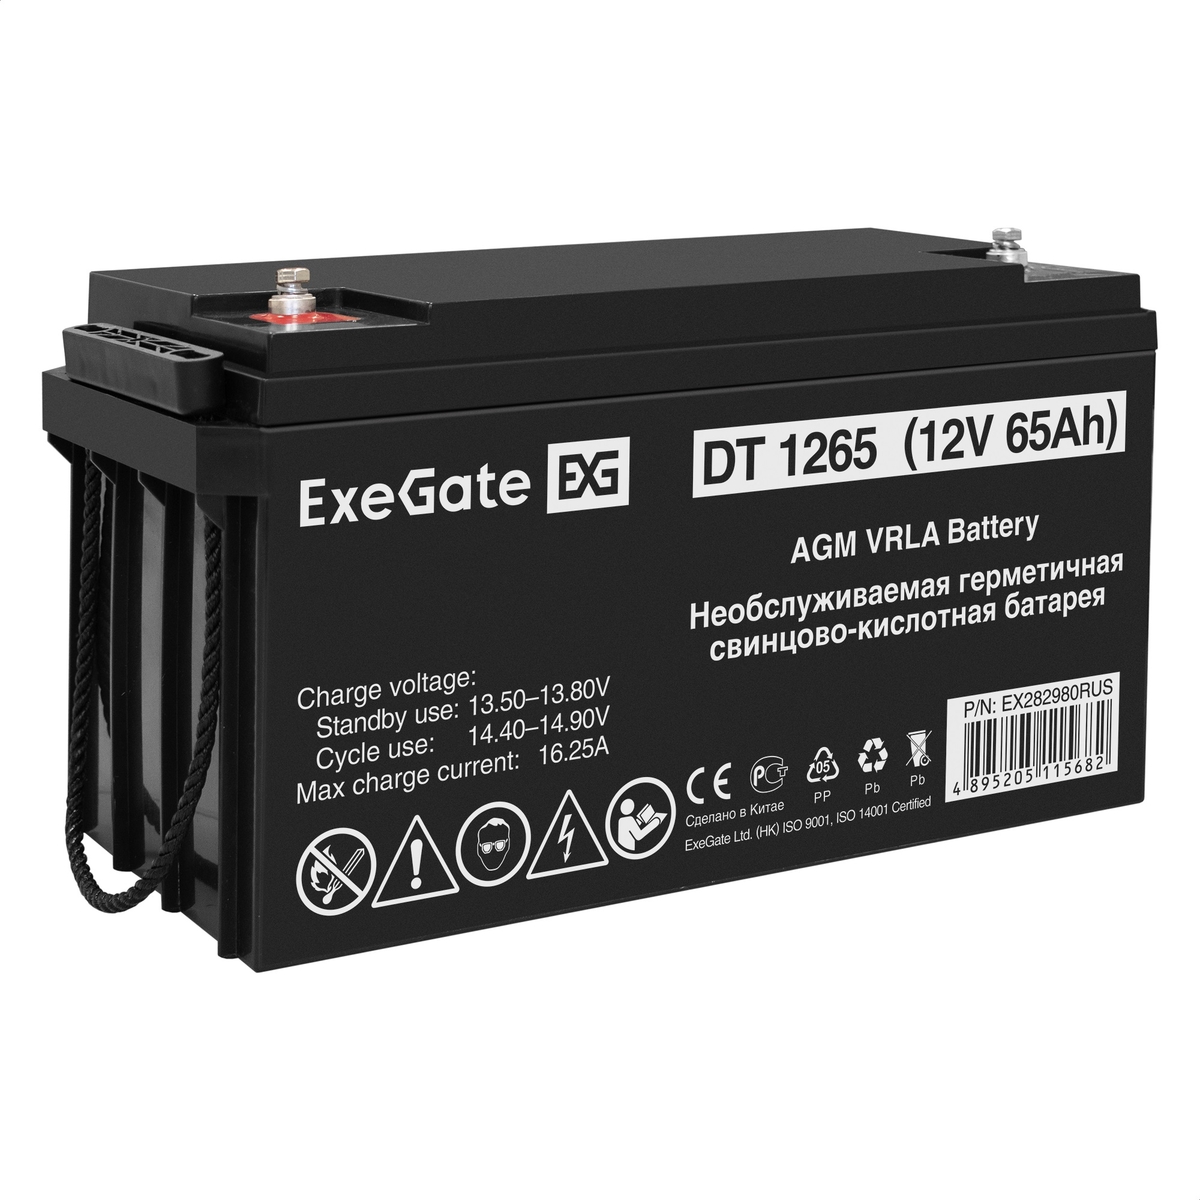 UPS set EX295996 + battery 65Ah EX282980 1 piece